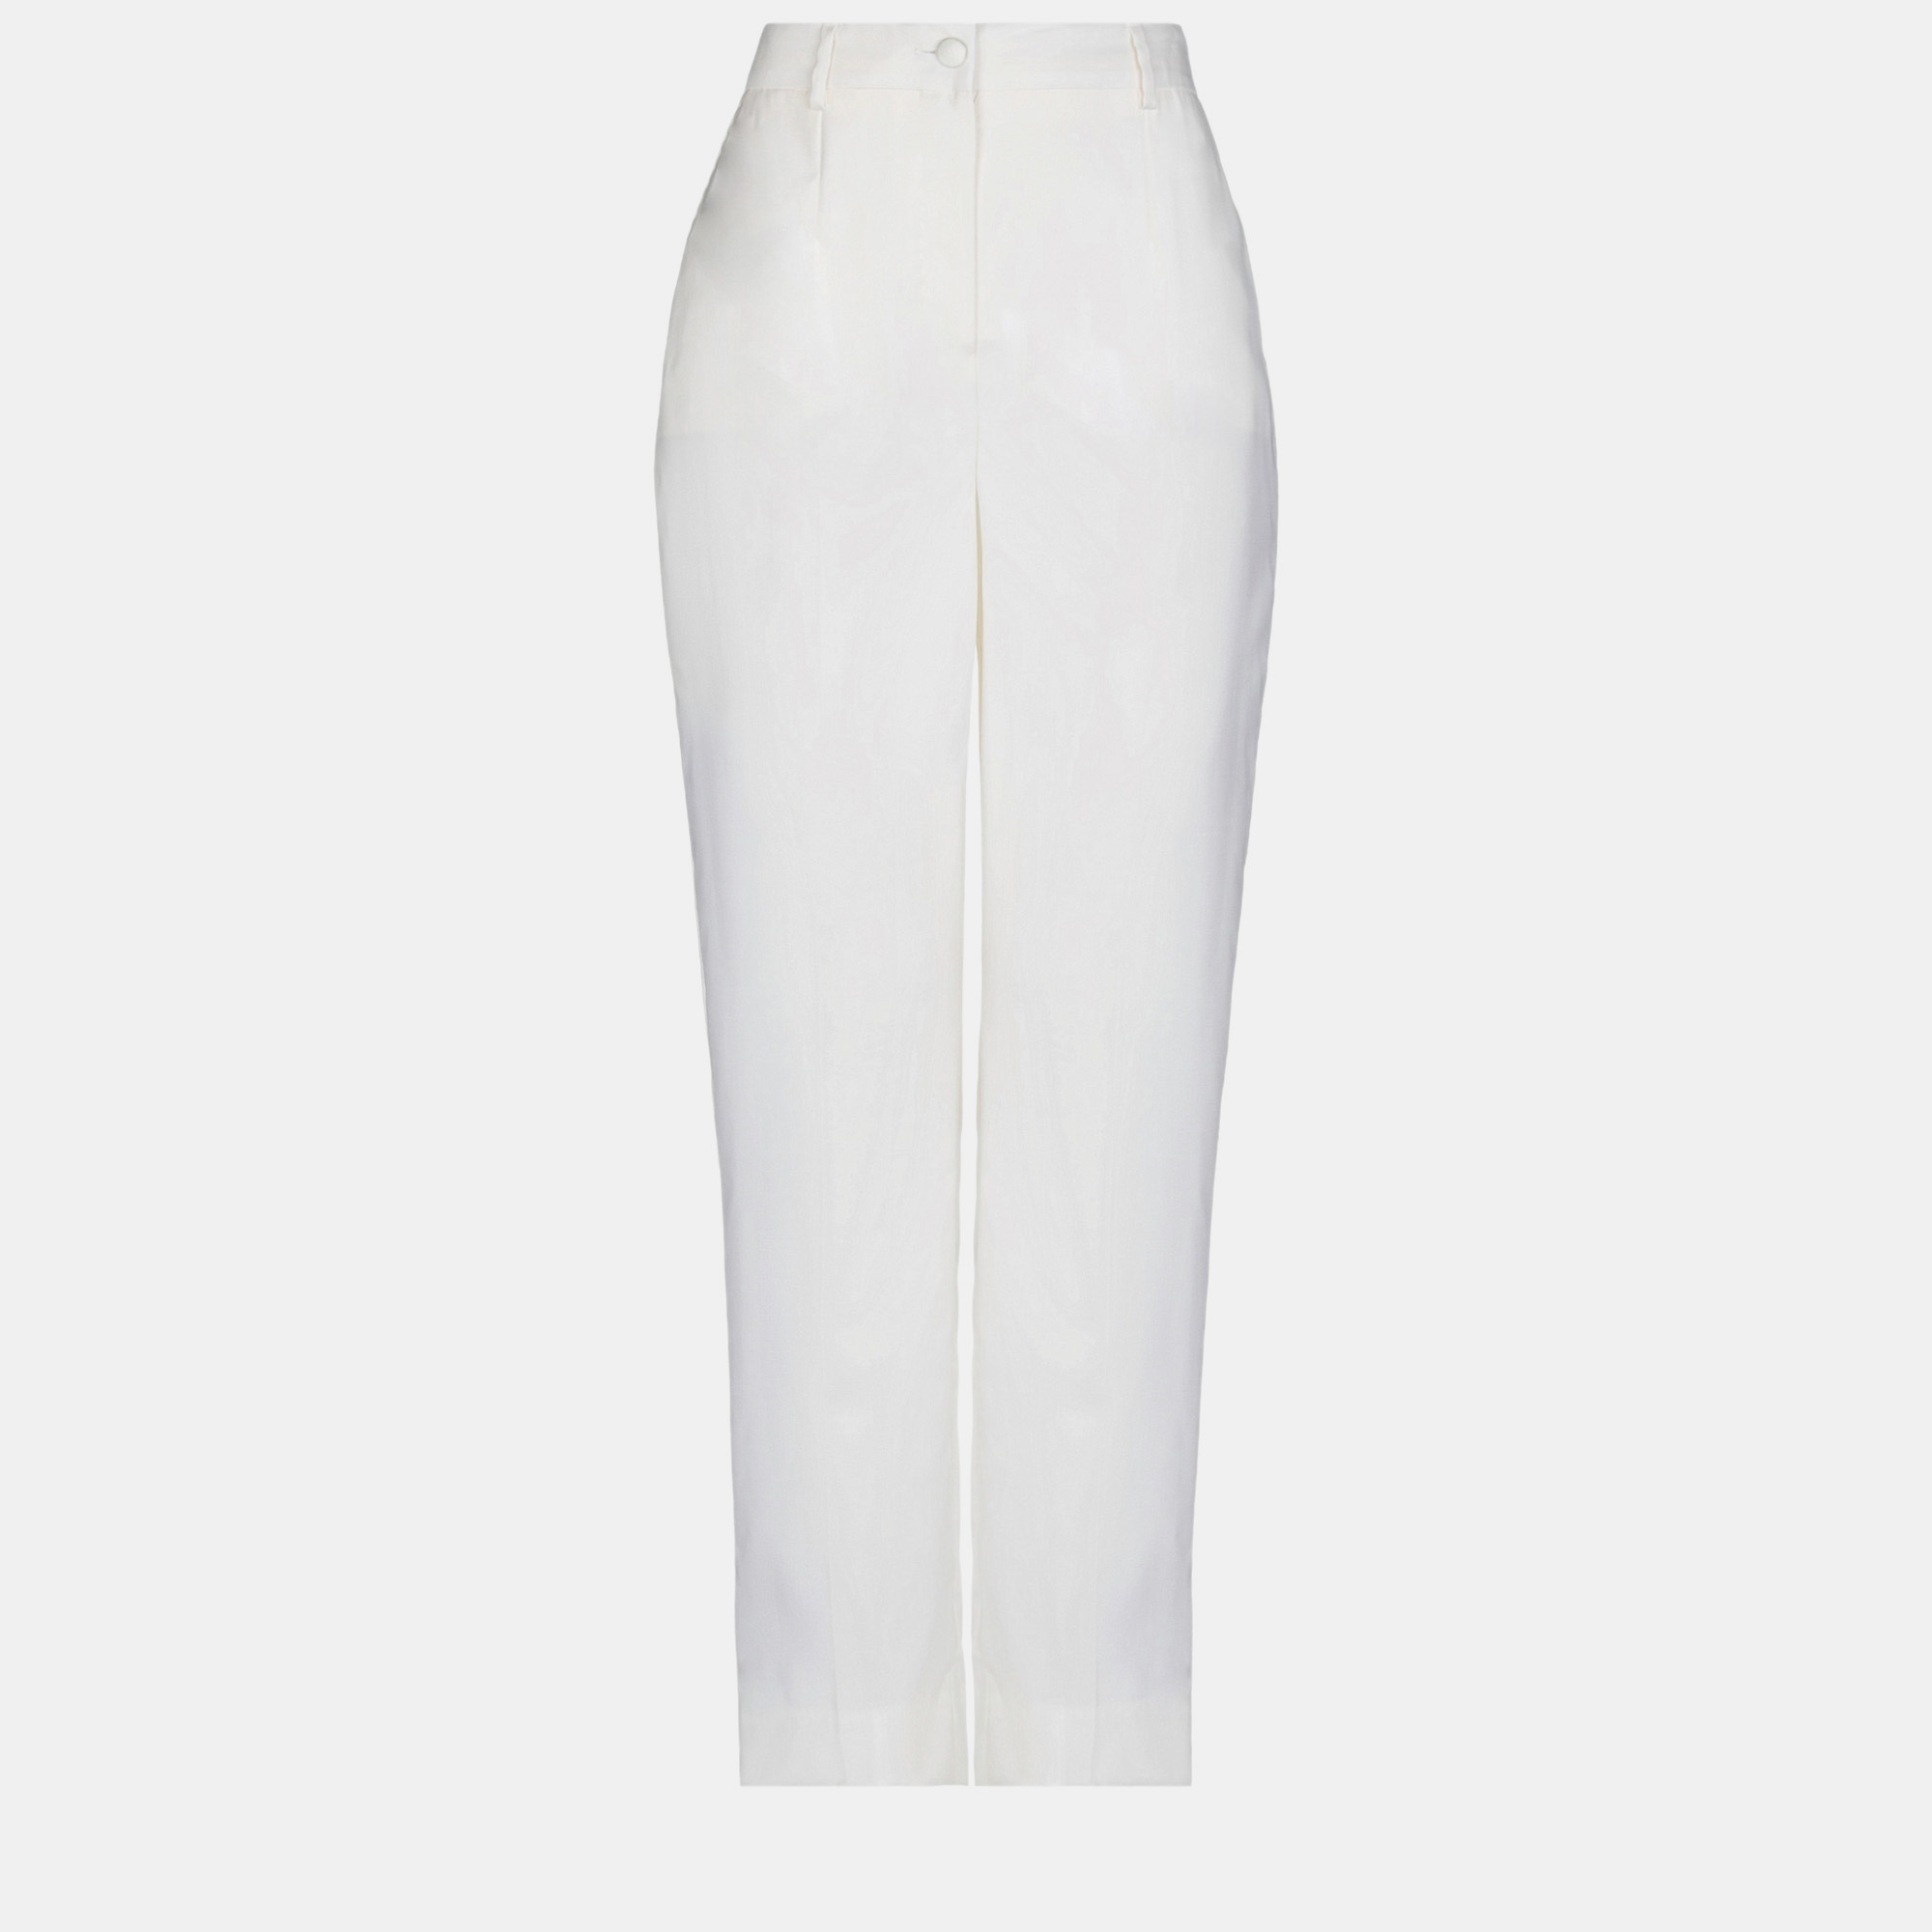 Dolce & gabbana white virgin wool trousers size 38